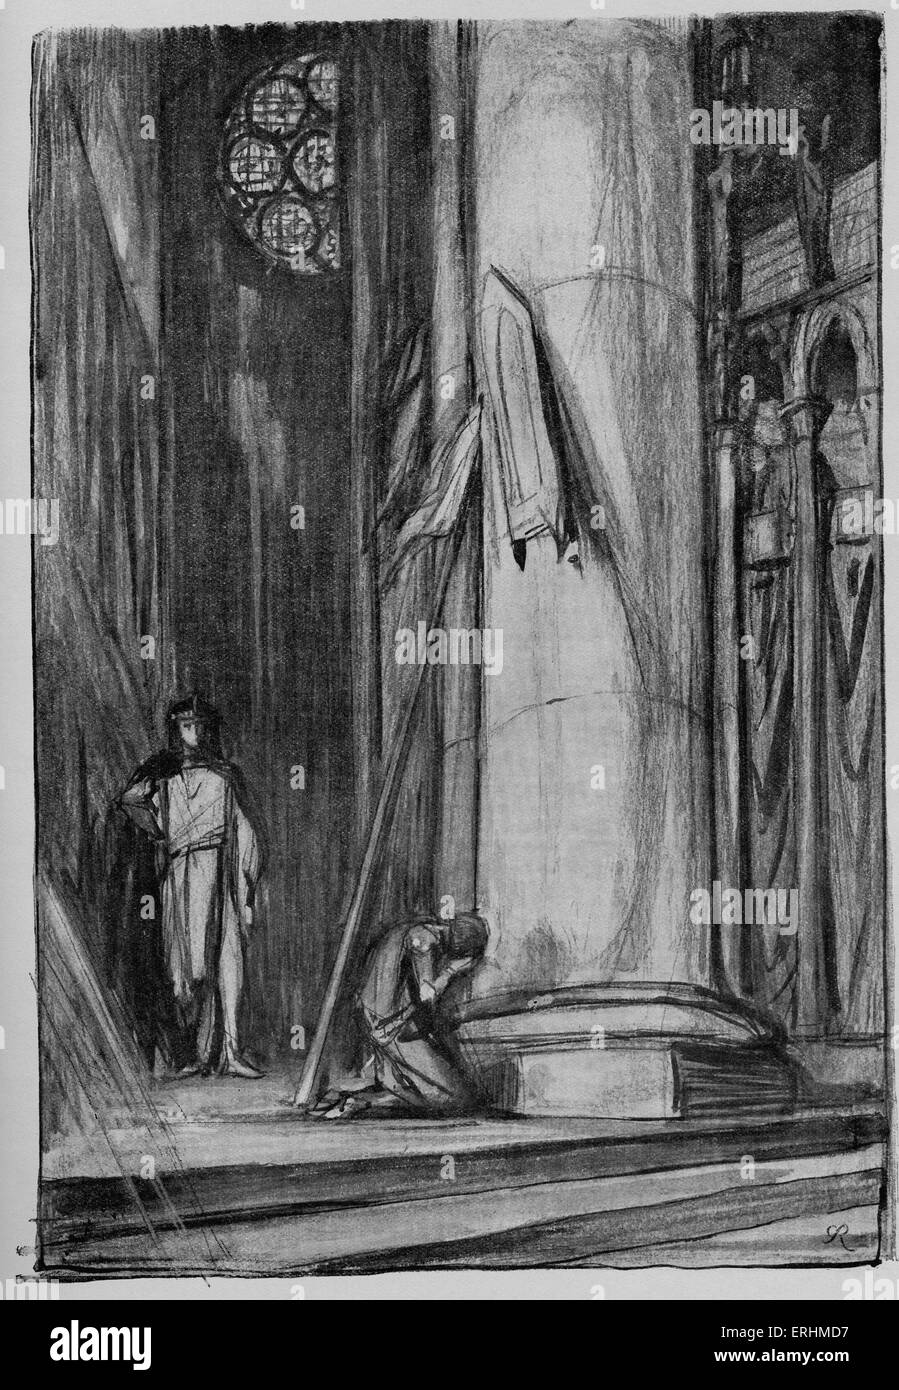 George Bernard Shaw - the Irish author 's play 'Saint Joan' (1923). GBS: 26 July 1856 - 2 November 1950. Illustration by Charles Ricketts (1866-1931). Stock Photo